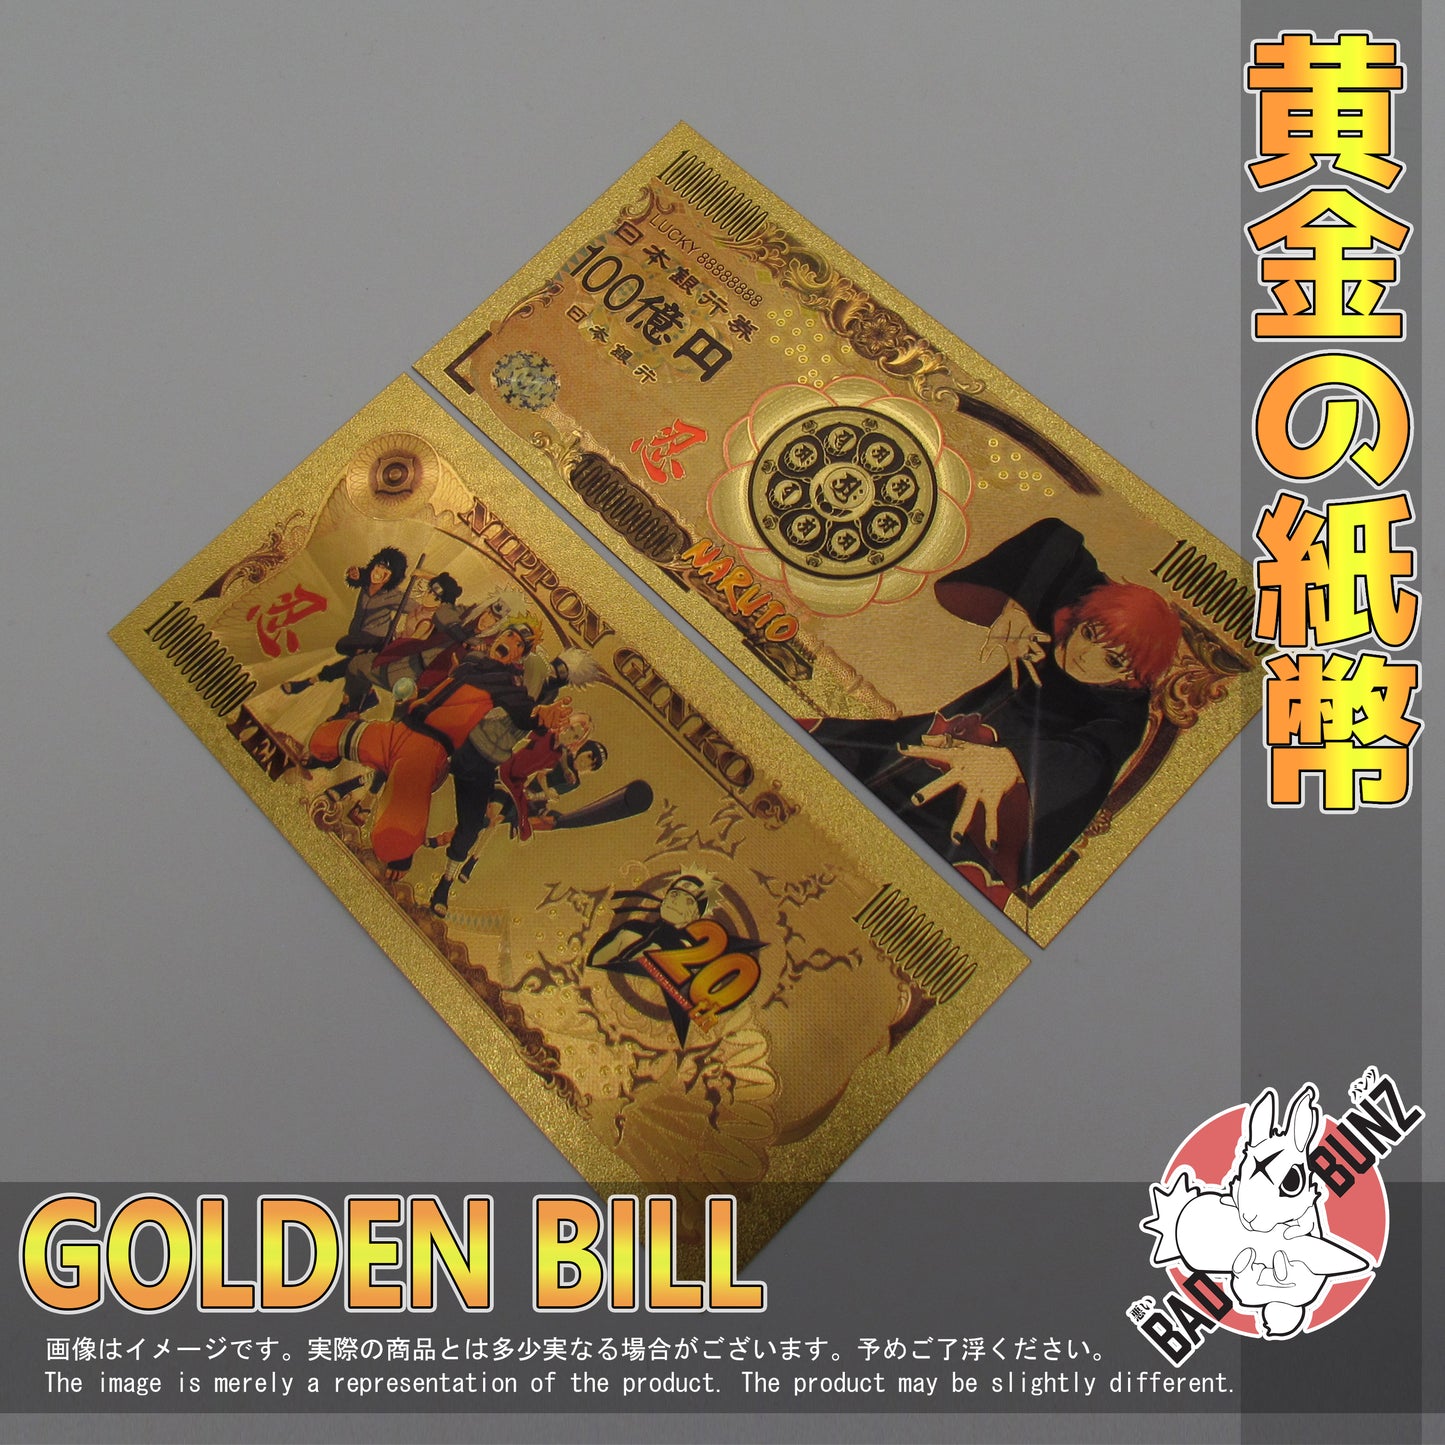 (NAR-09GBILL) SASORI Naruto Anime Golden Japanese Yen Bill